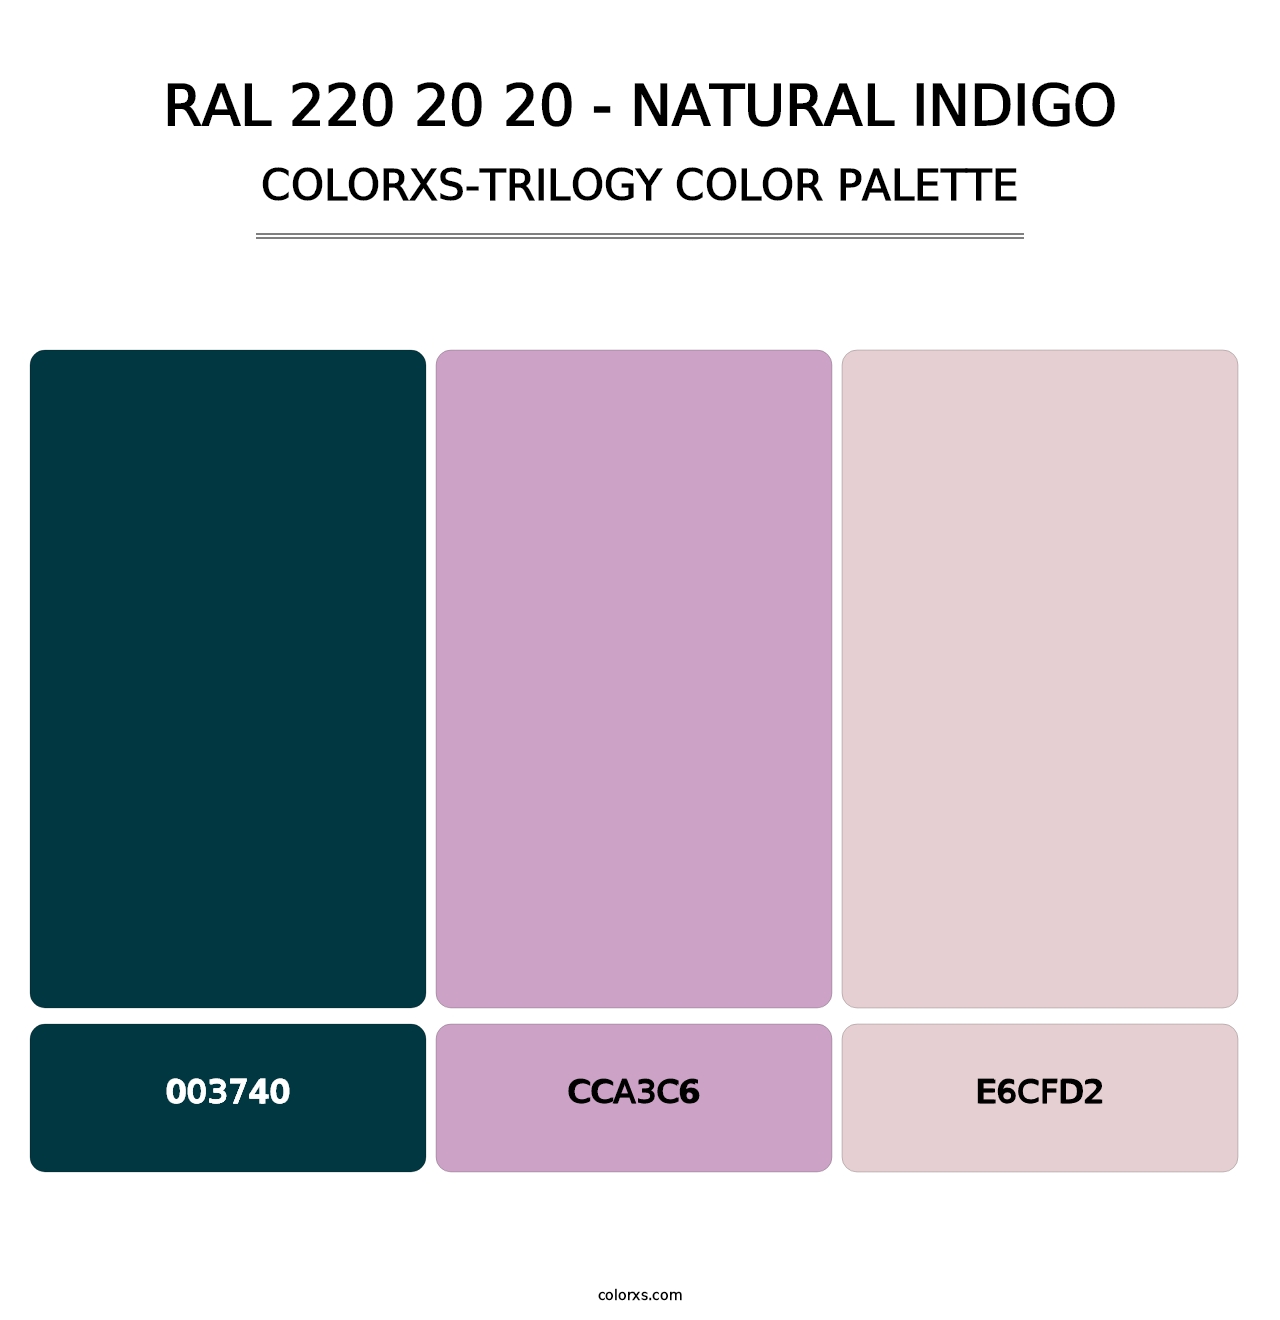 RAL 220 20 20 - Natural Indigo - Colorxs Trilogy Palette